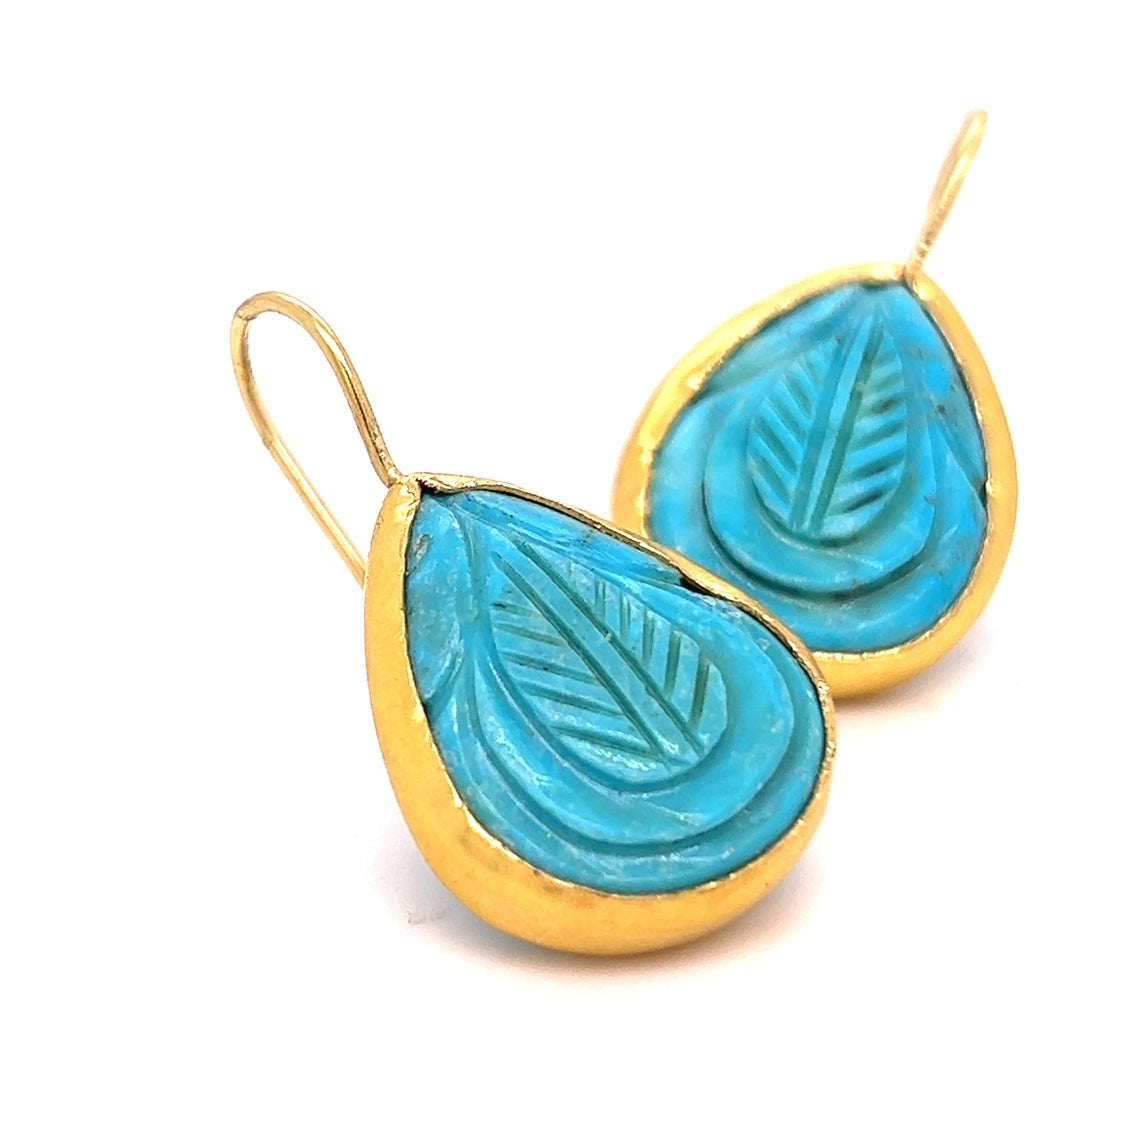 Carved Turquoise Teardrop Earrings